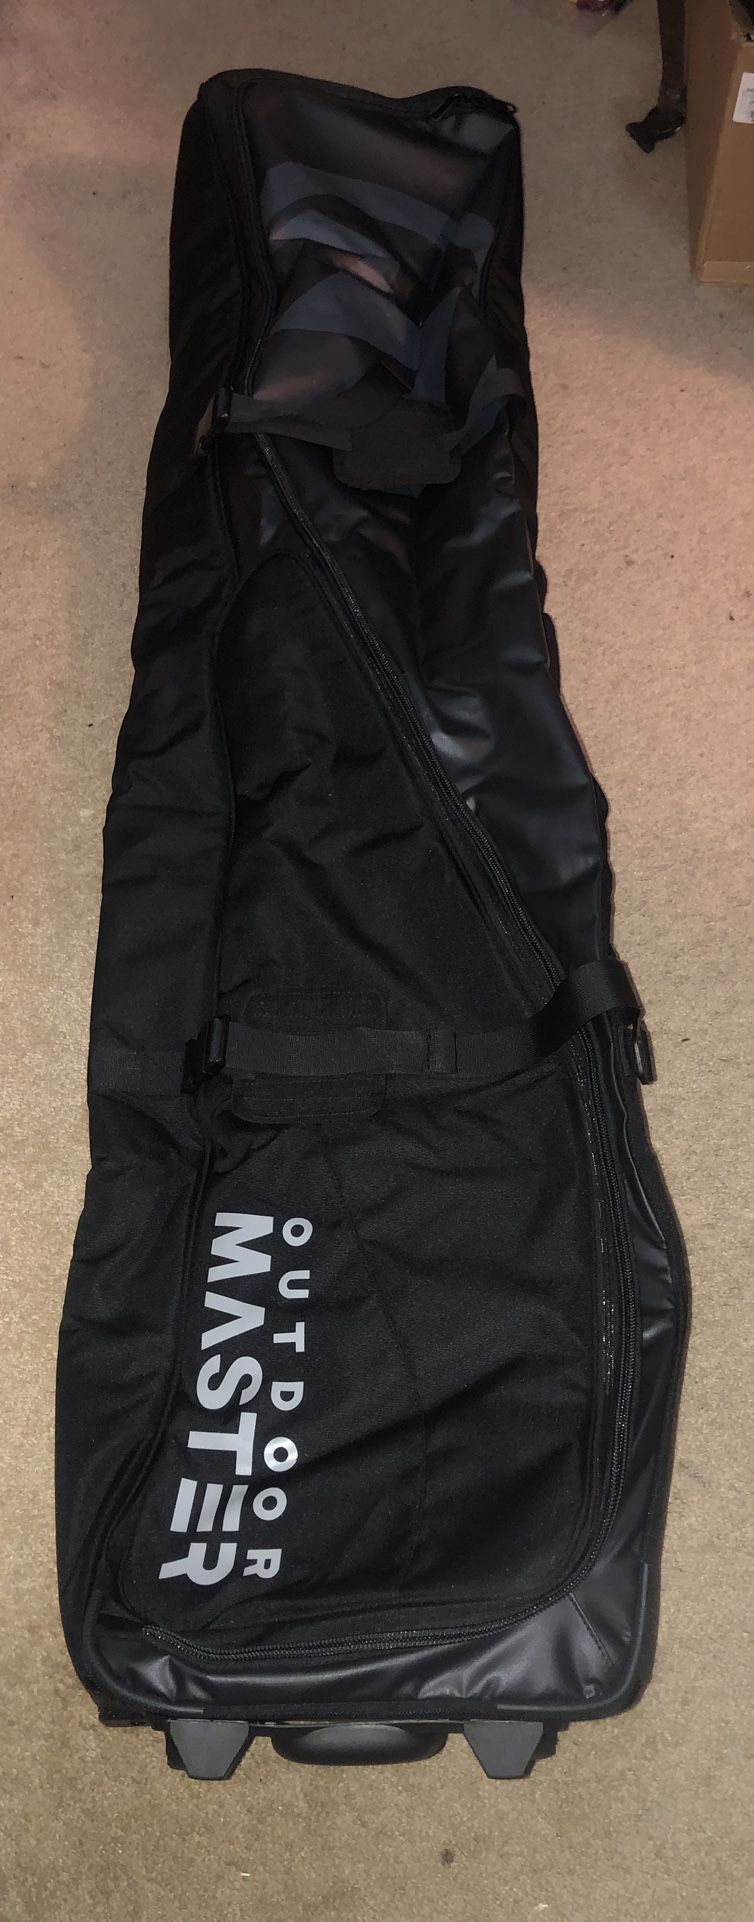 New OutdoorMaster Snowboard Bag W/ Wheels